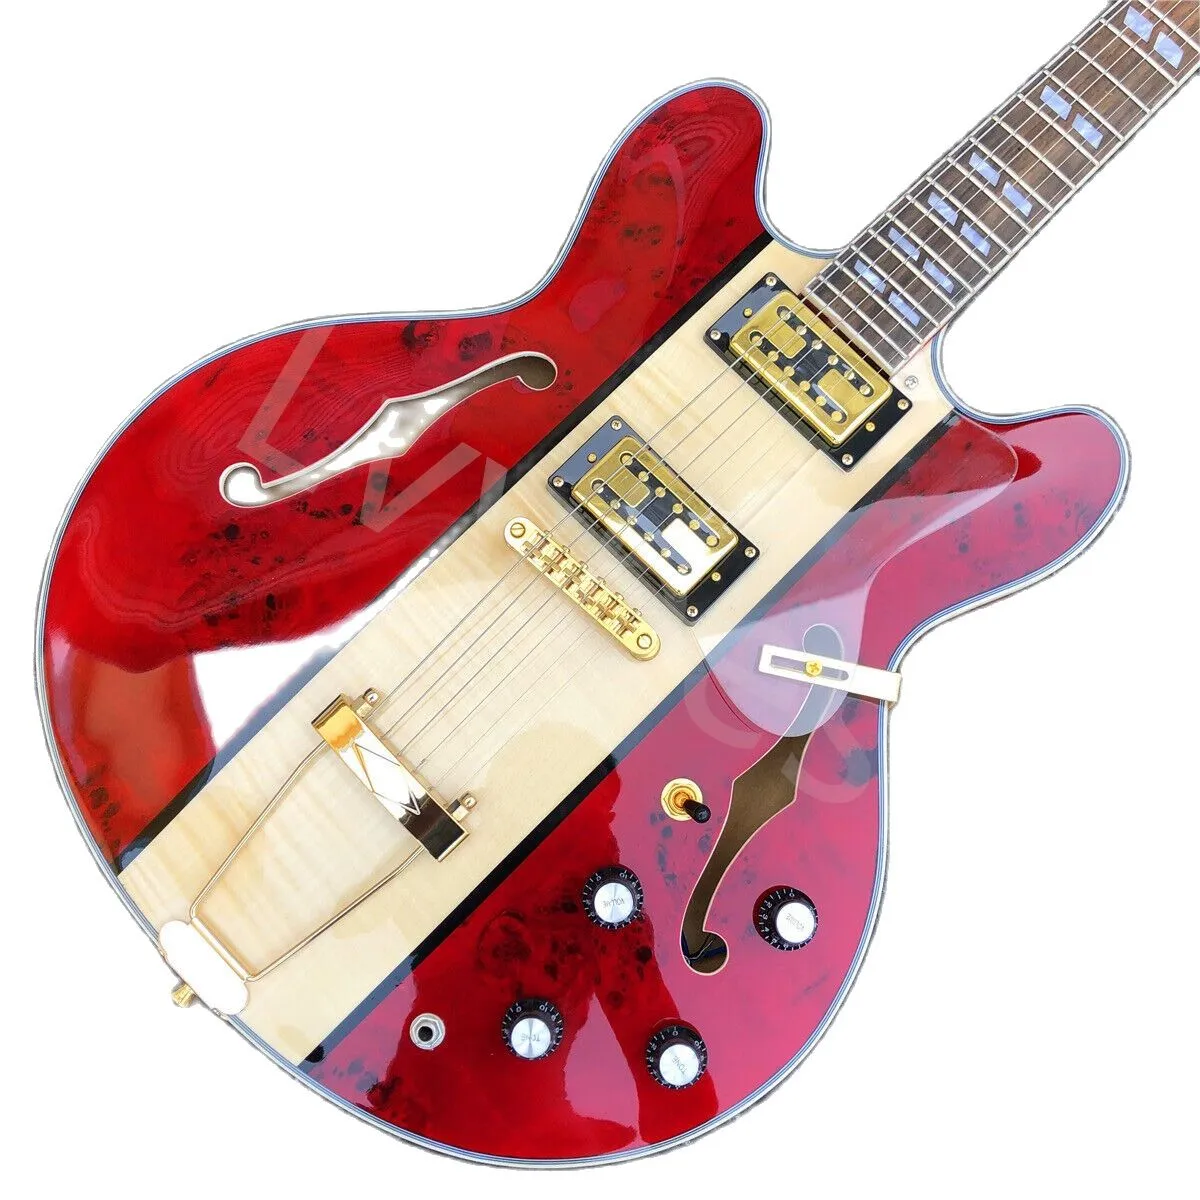 LvyBest Red Glossy Finish Half Hollow Acced Jazz Electric Guitar Gold Hardwood ЭЛЕРЕГОЛИТА